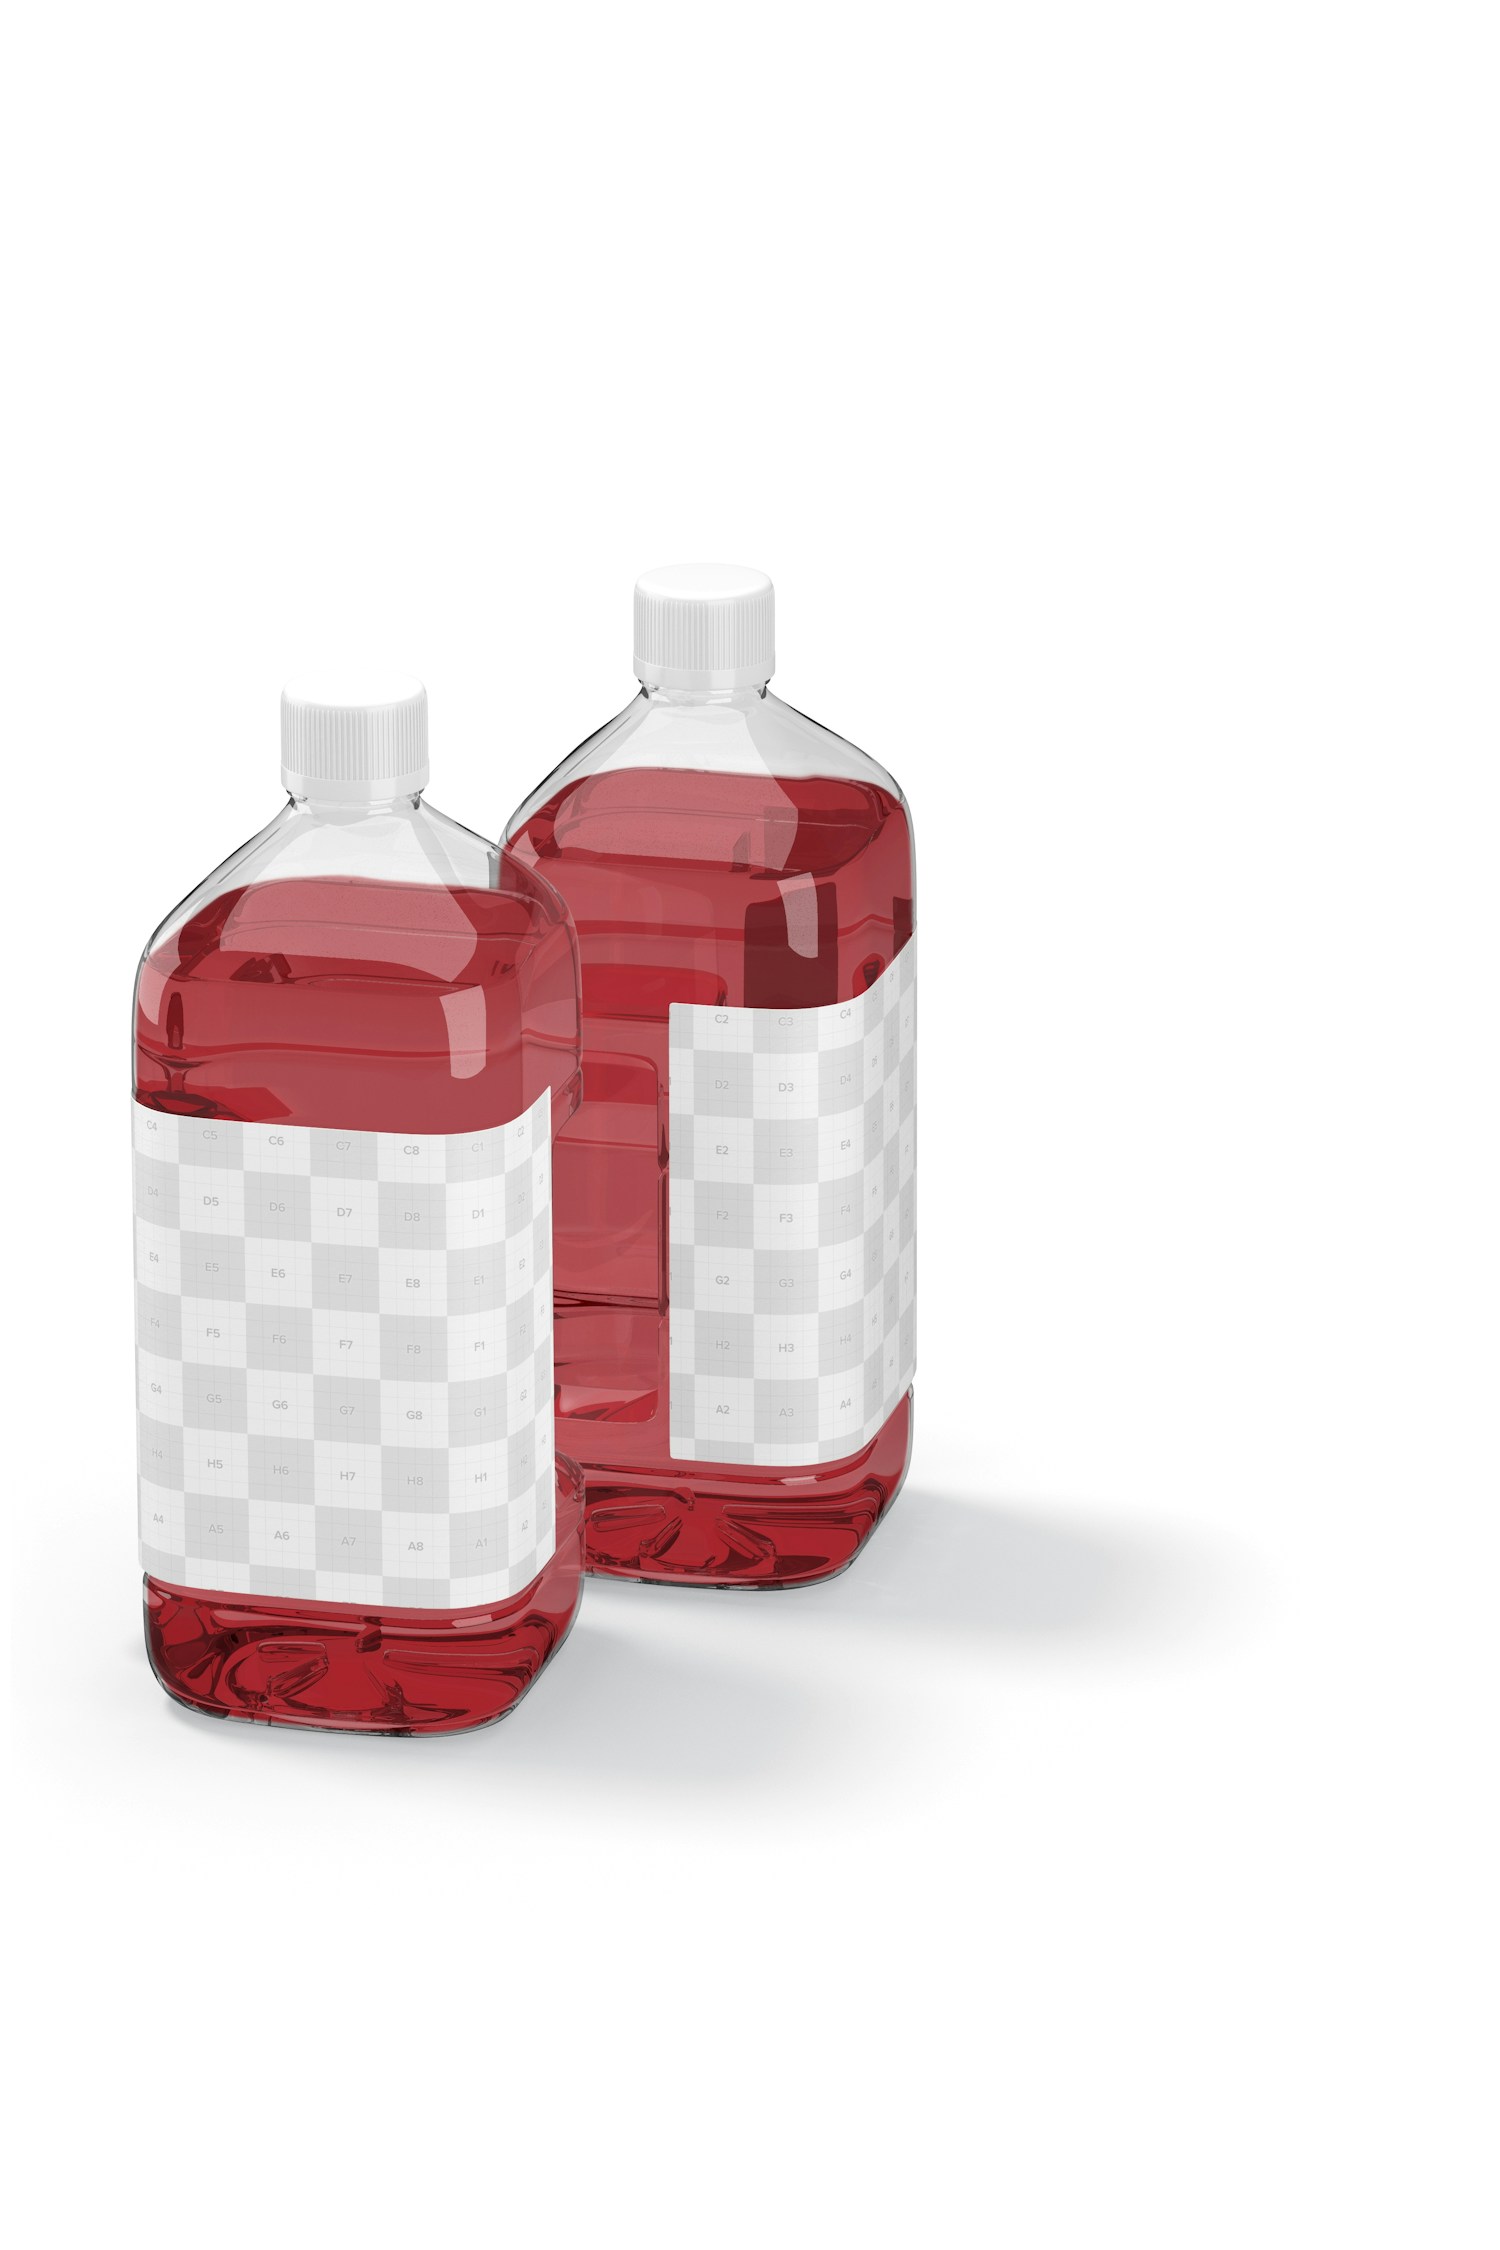 Maqueta de Botellas Transparentes de Jugo 64 oz, Perspectiva